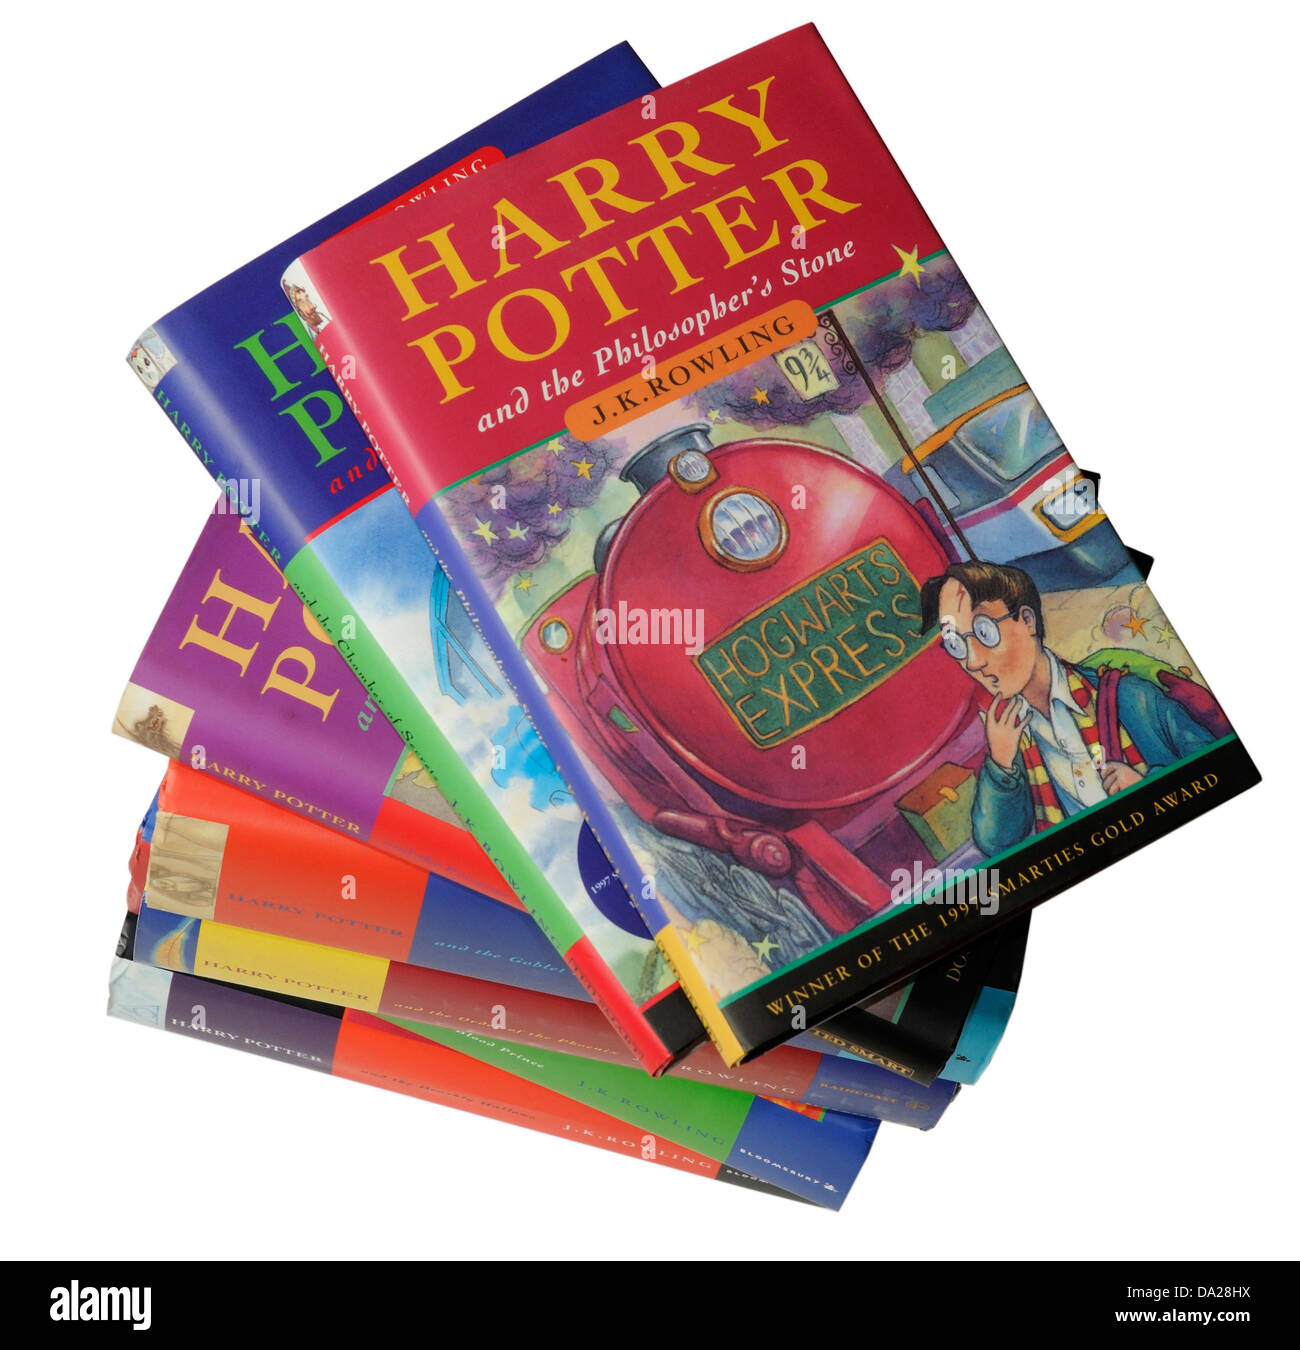 The 7 Harry Potter books Stock Photo